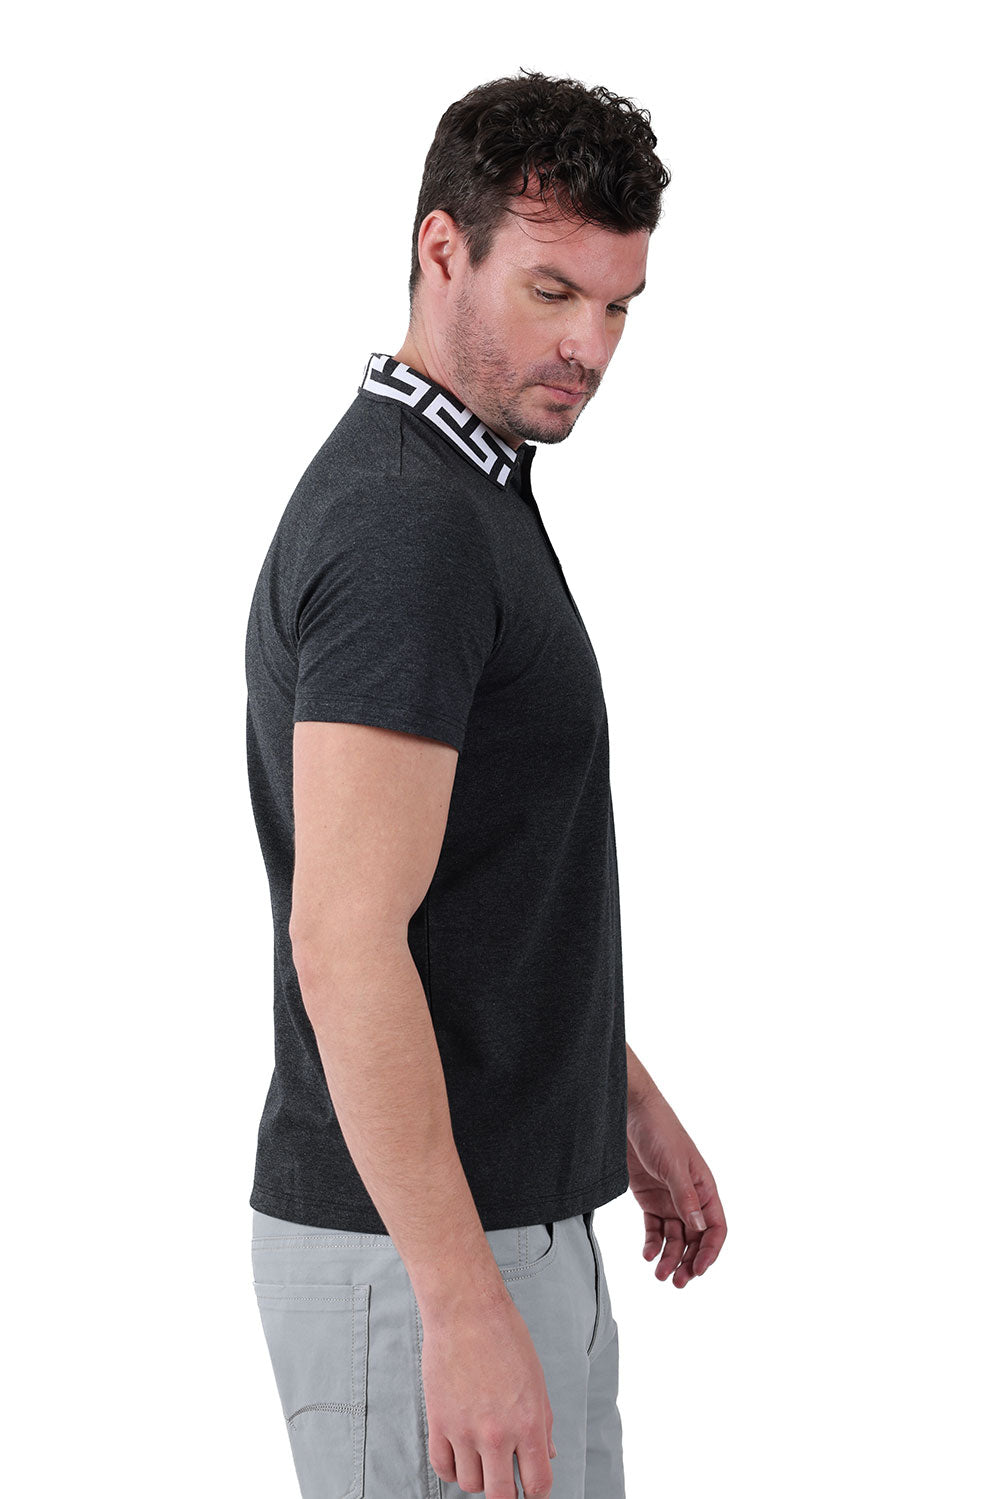 Barabas Men's Greek Key Printed Pattern Short Sleeve Shirts PS121 Charcoal